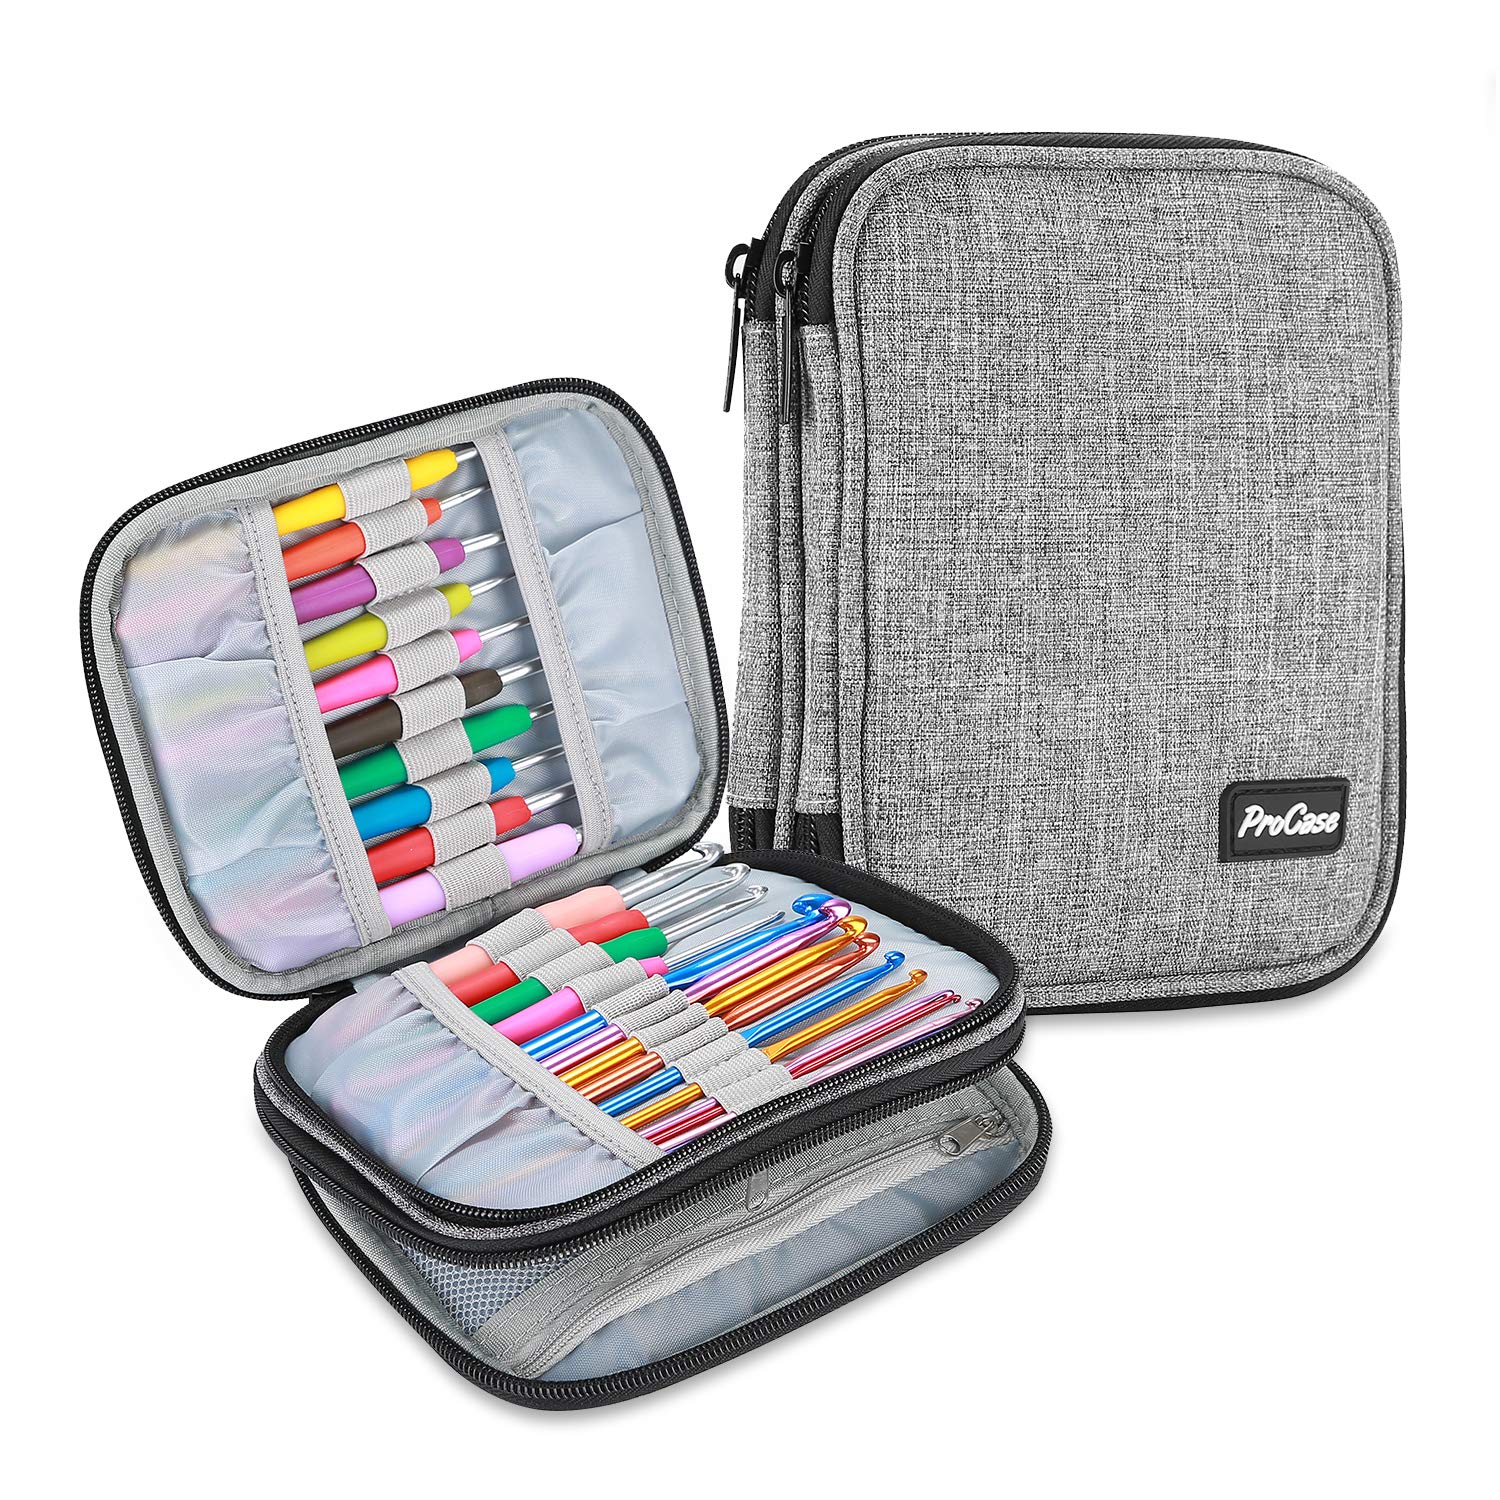 ProCase Crochet Hook Case (up to 6.5 Inches) Travel Organizer Zipper Bag  for Various Crochet Hooks